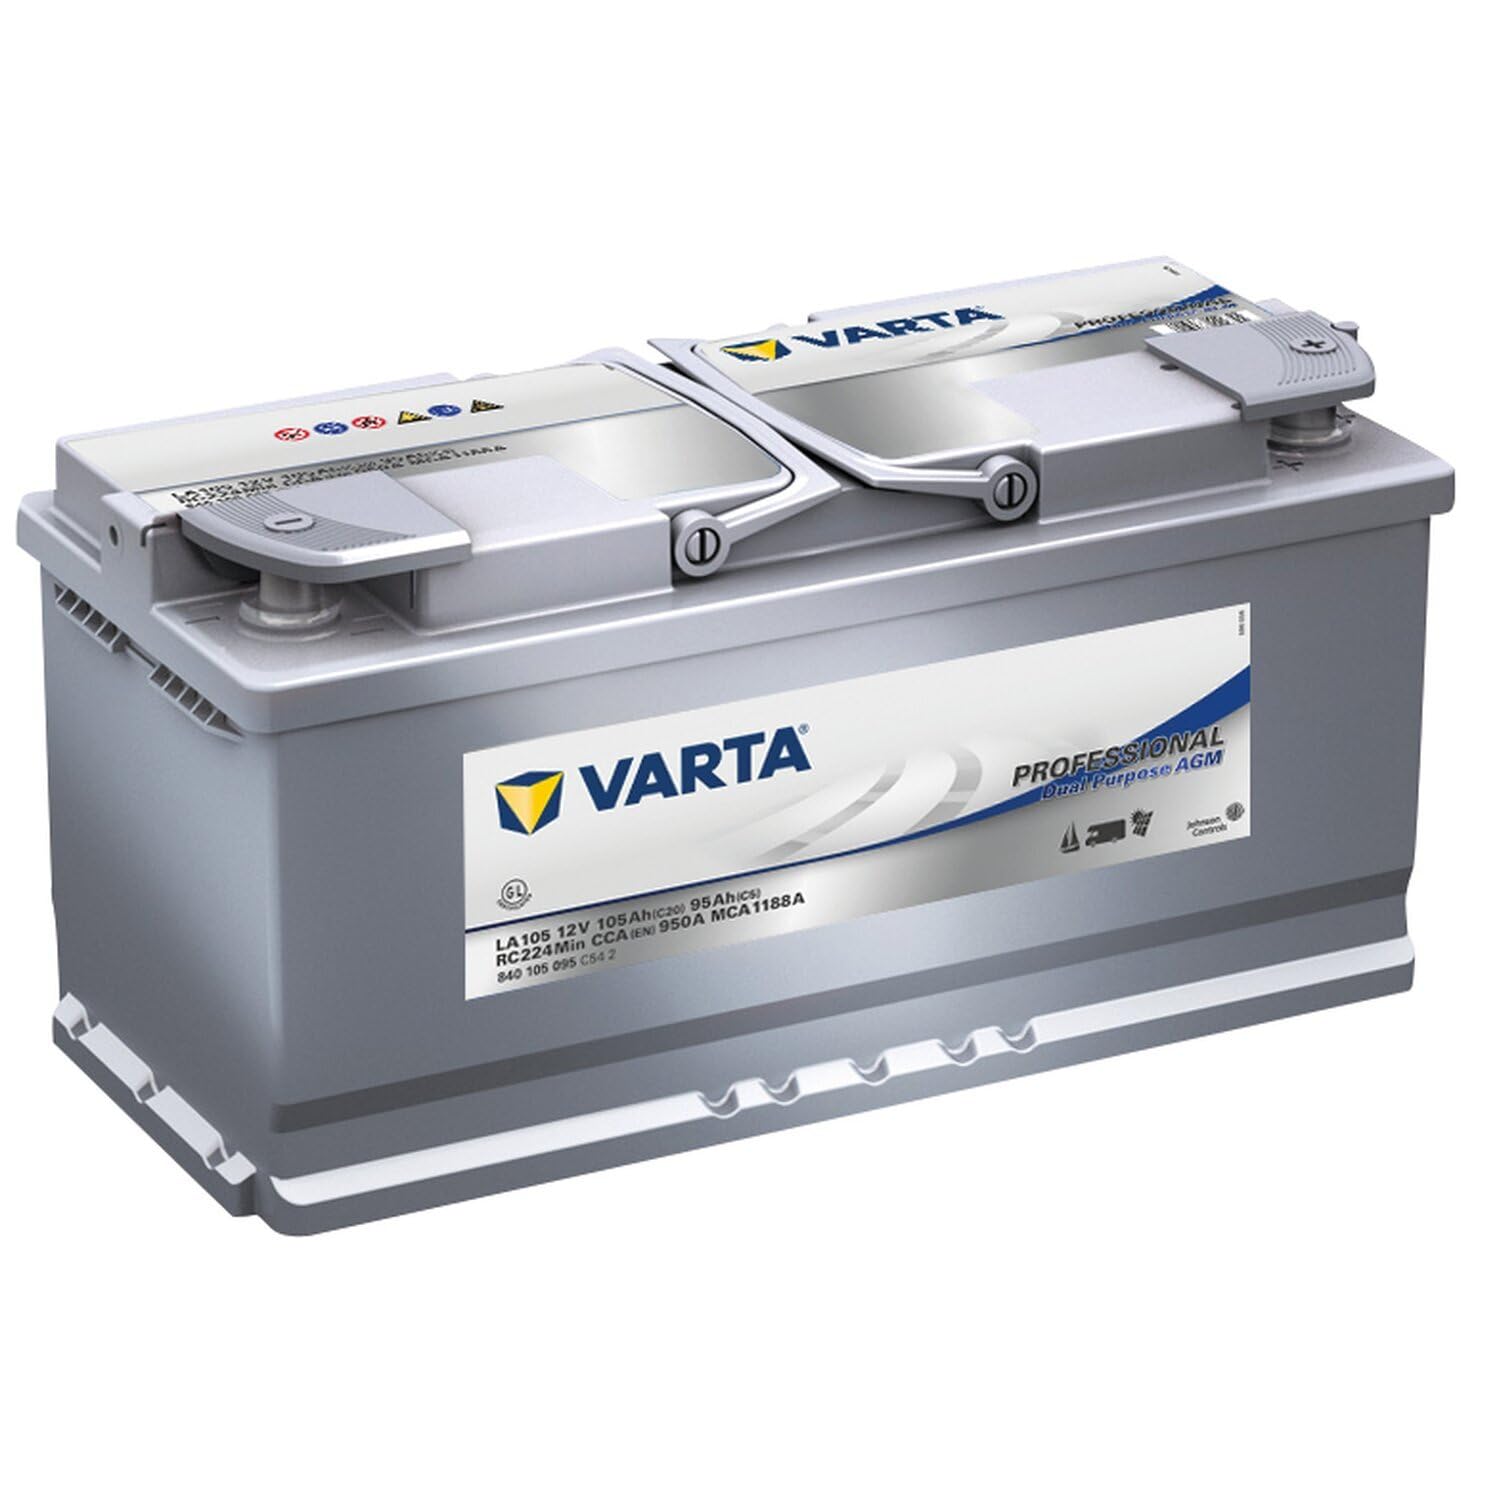 VARTA Professional Dual Purpose AGM 105Ah LA105 von Varta